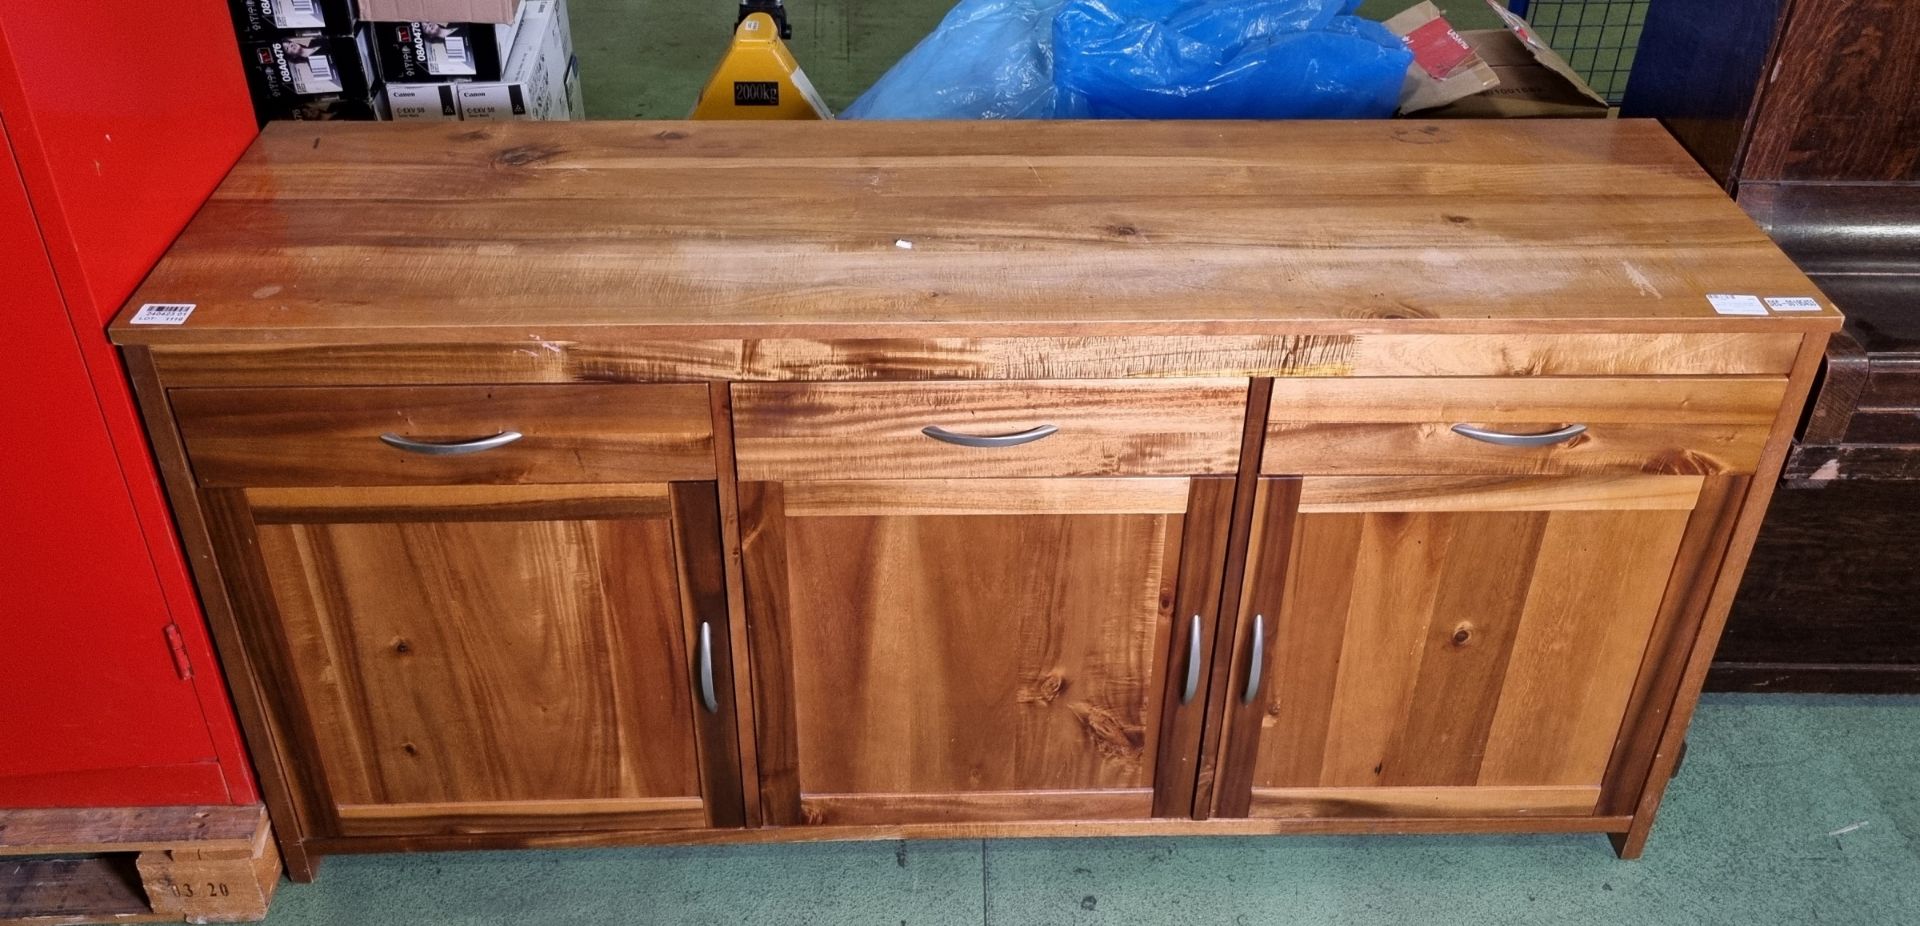 3 door 3 drawer wooden cabinet - W 1750 x D 500 x H 840mm - IN NEED OF REPAIR - Image 2 of 7